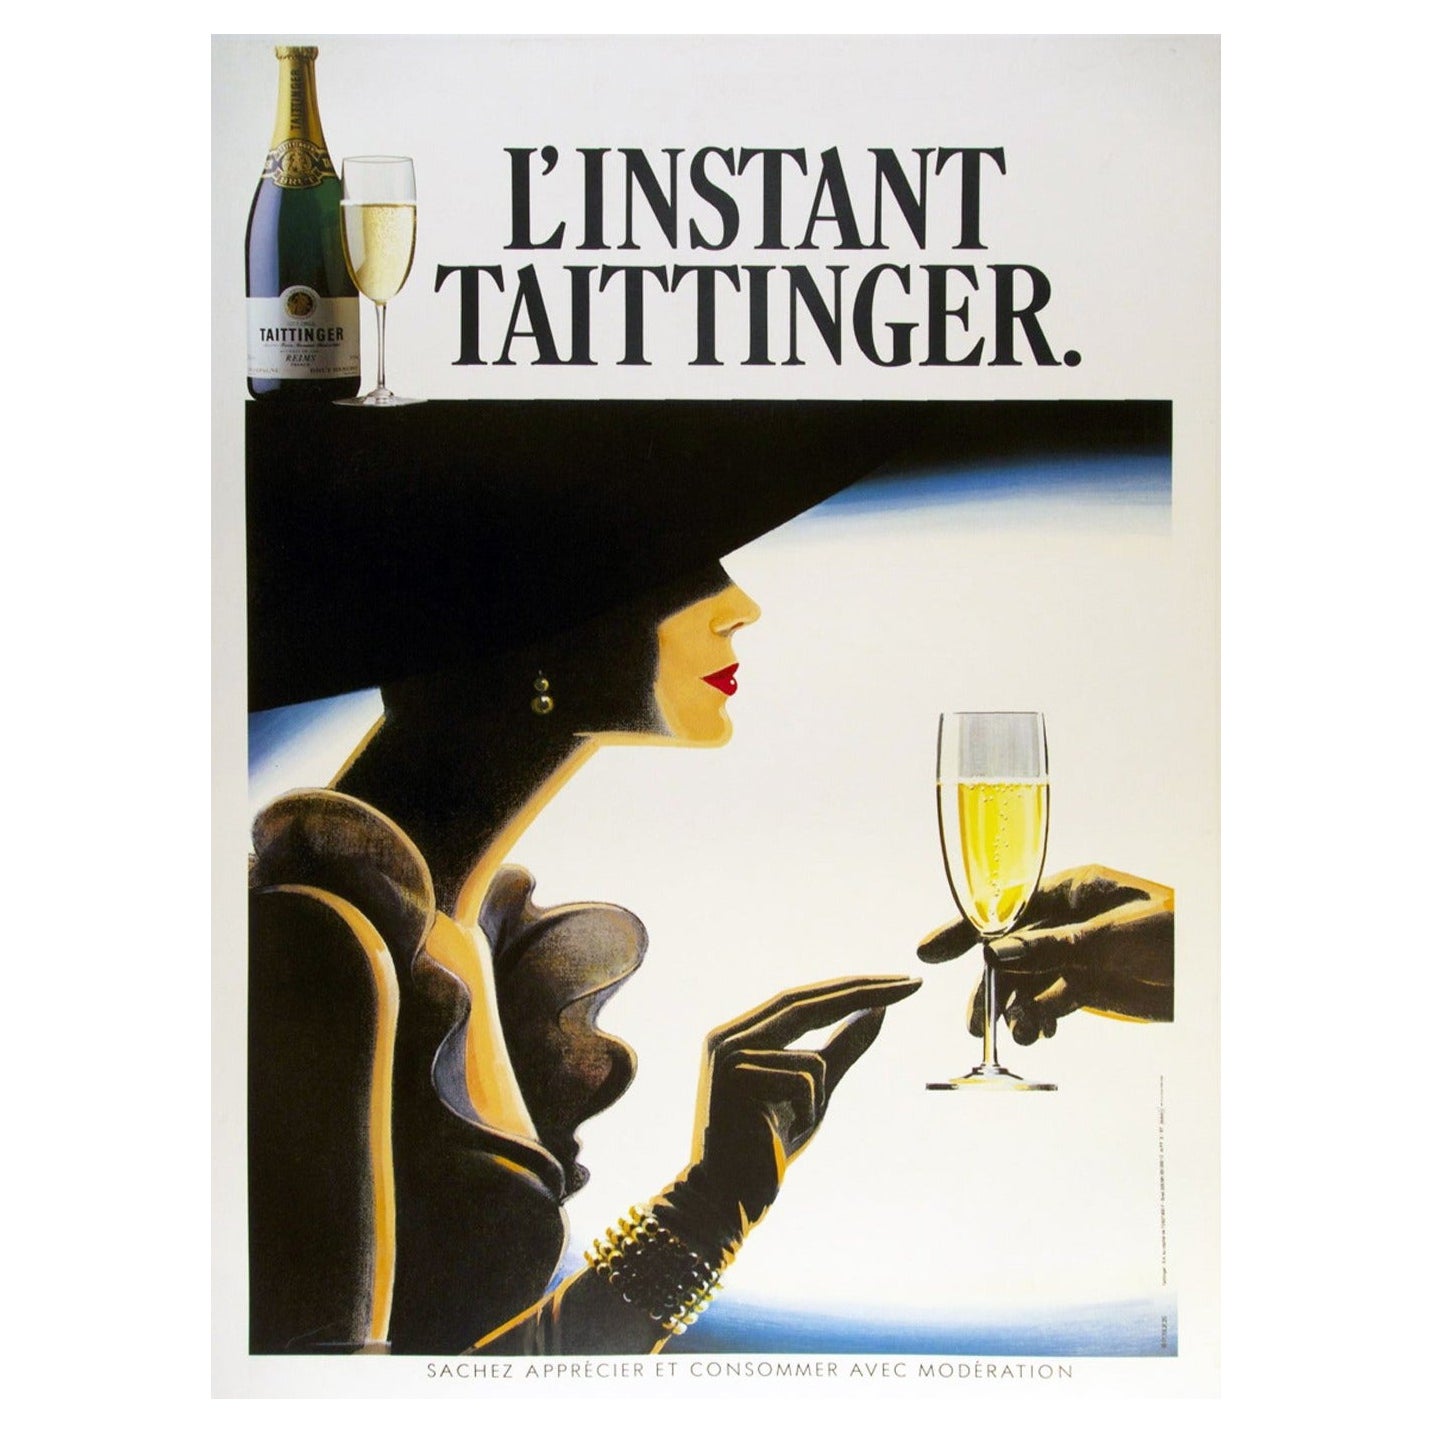 1980 L'Instant Taittinger Champagne Original Vintage Poster For Sale